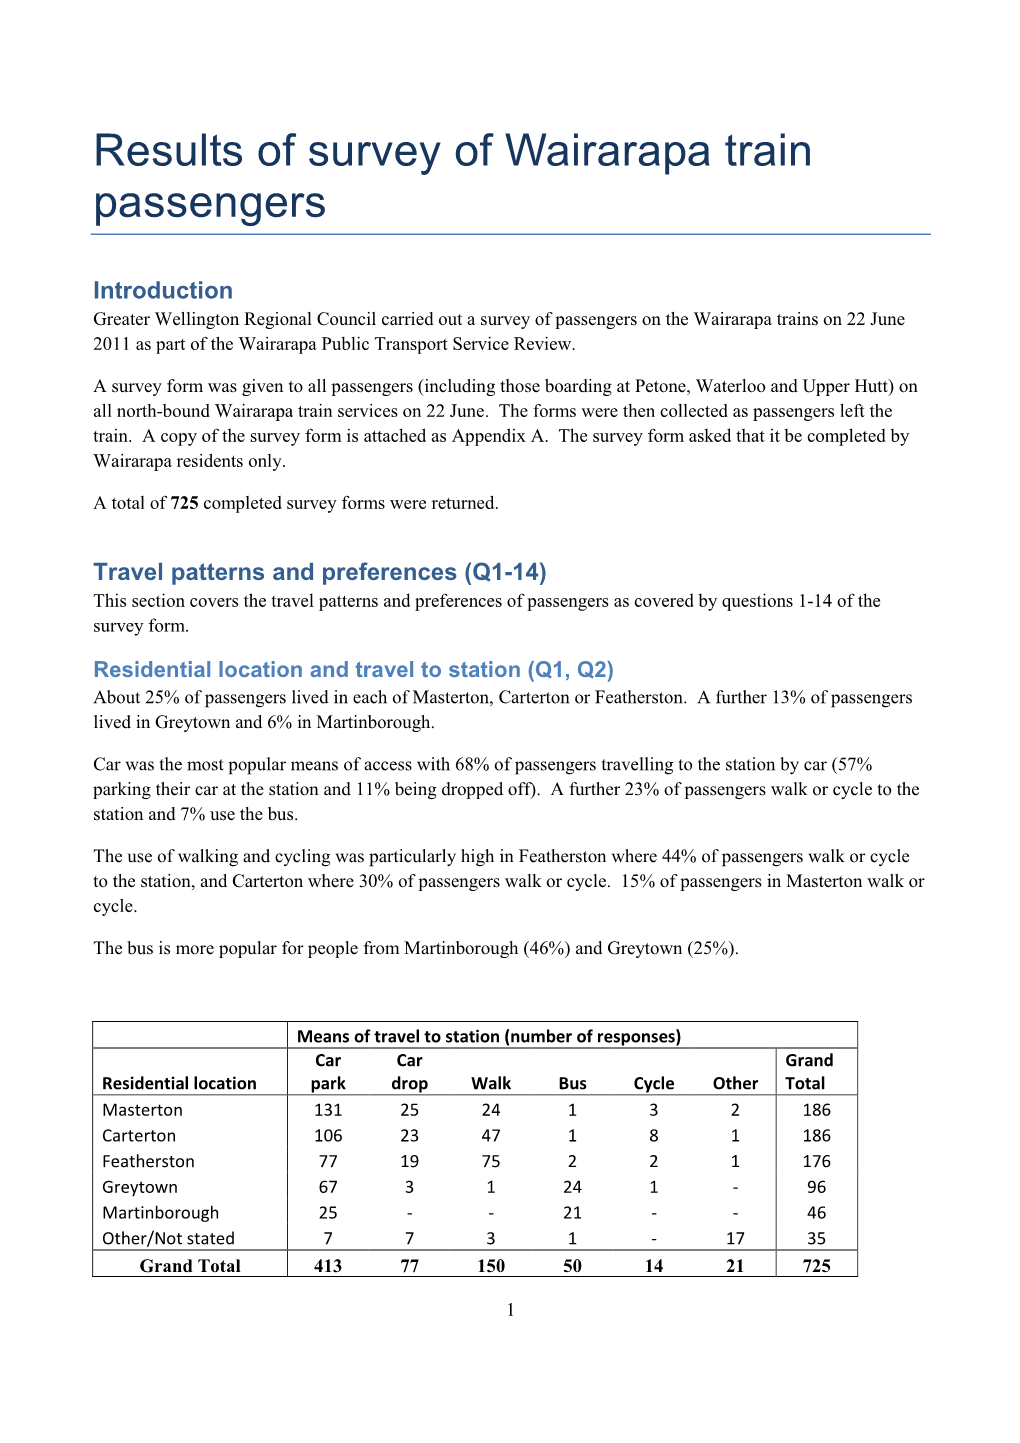 Results of Survey of Wairarapa Train Passengers